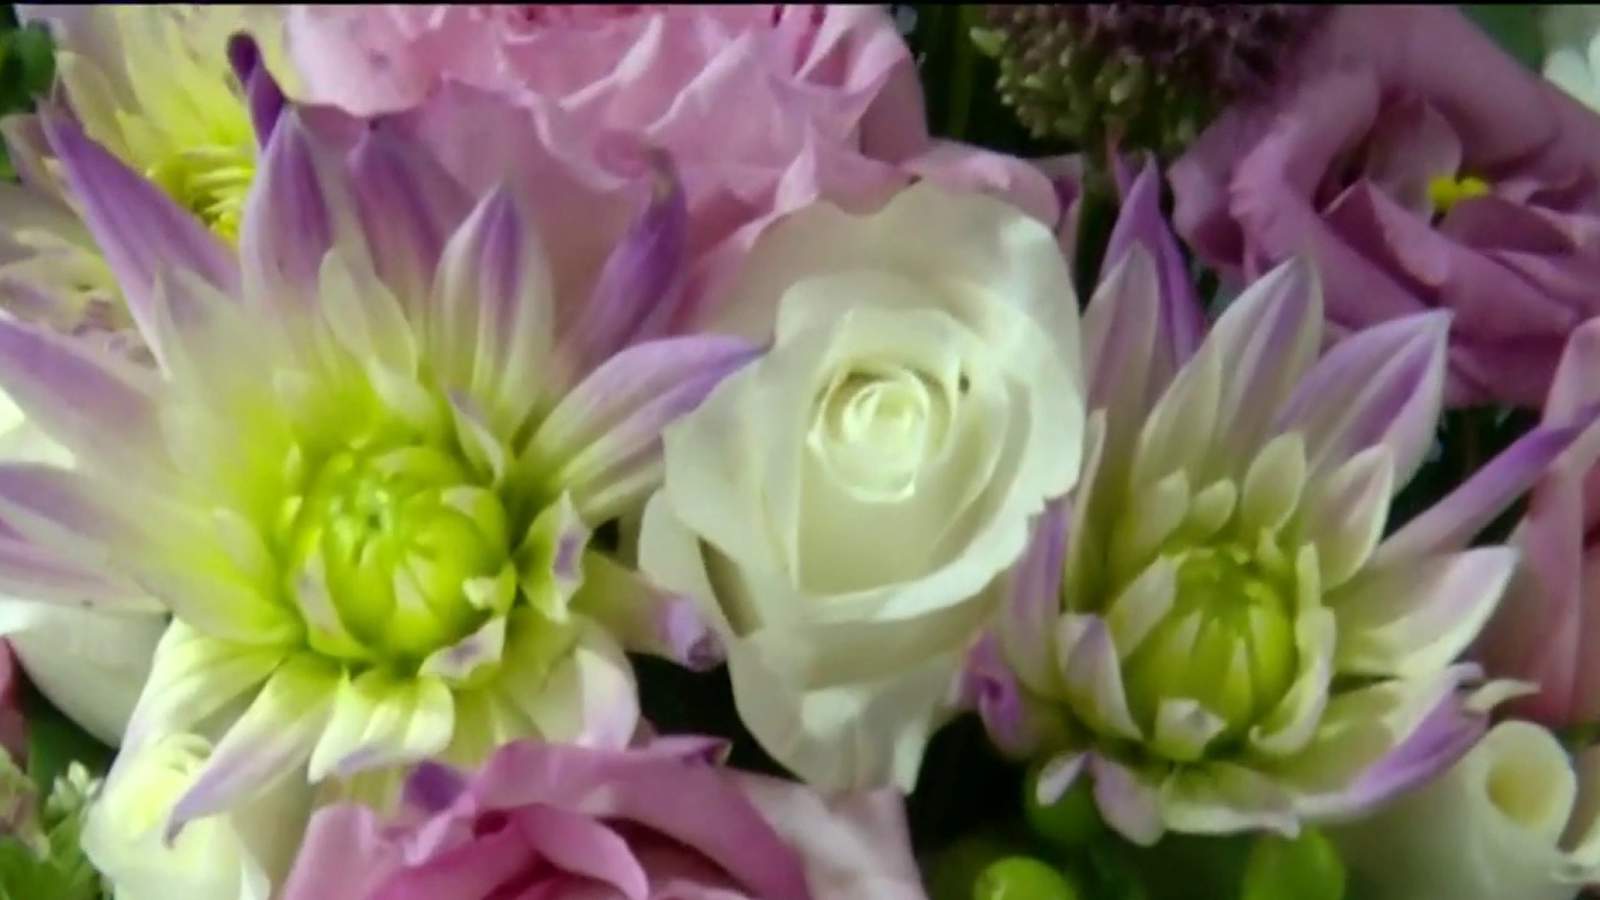 Family bond helps create beautiful flower bouquets at Maison Farola